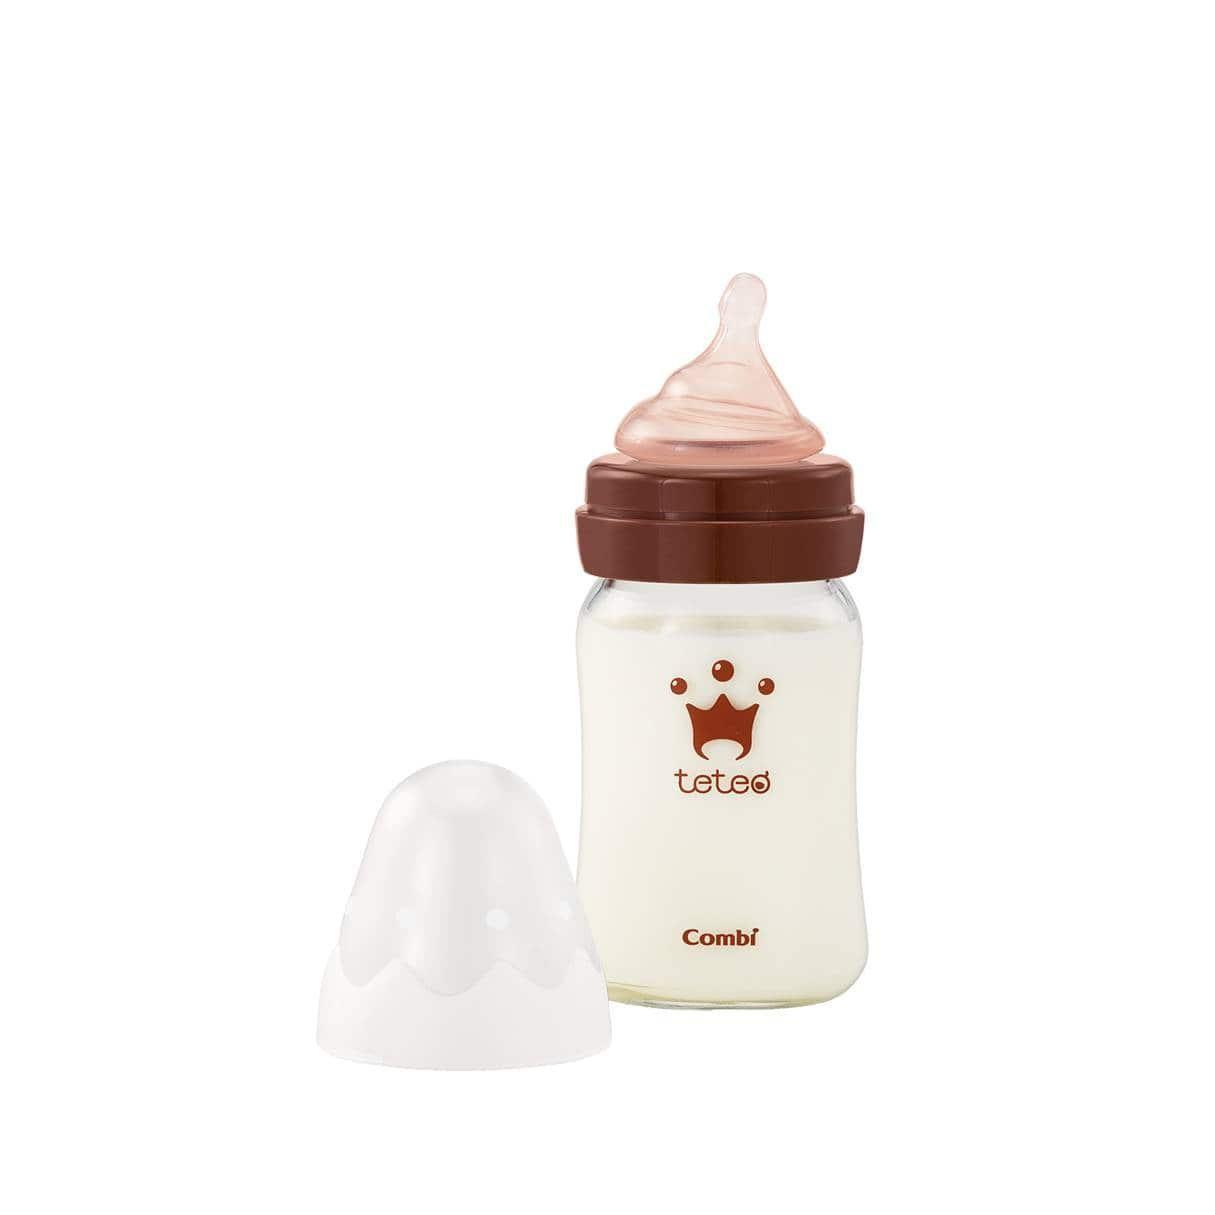 Combi Teteo Baby Bottle Breastfeeding Shaped Glass Bottle 160ml